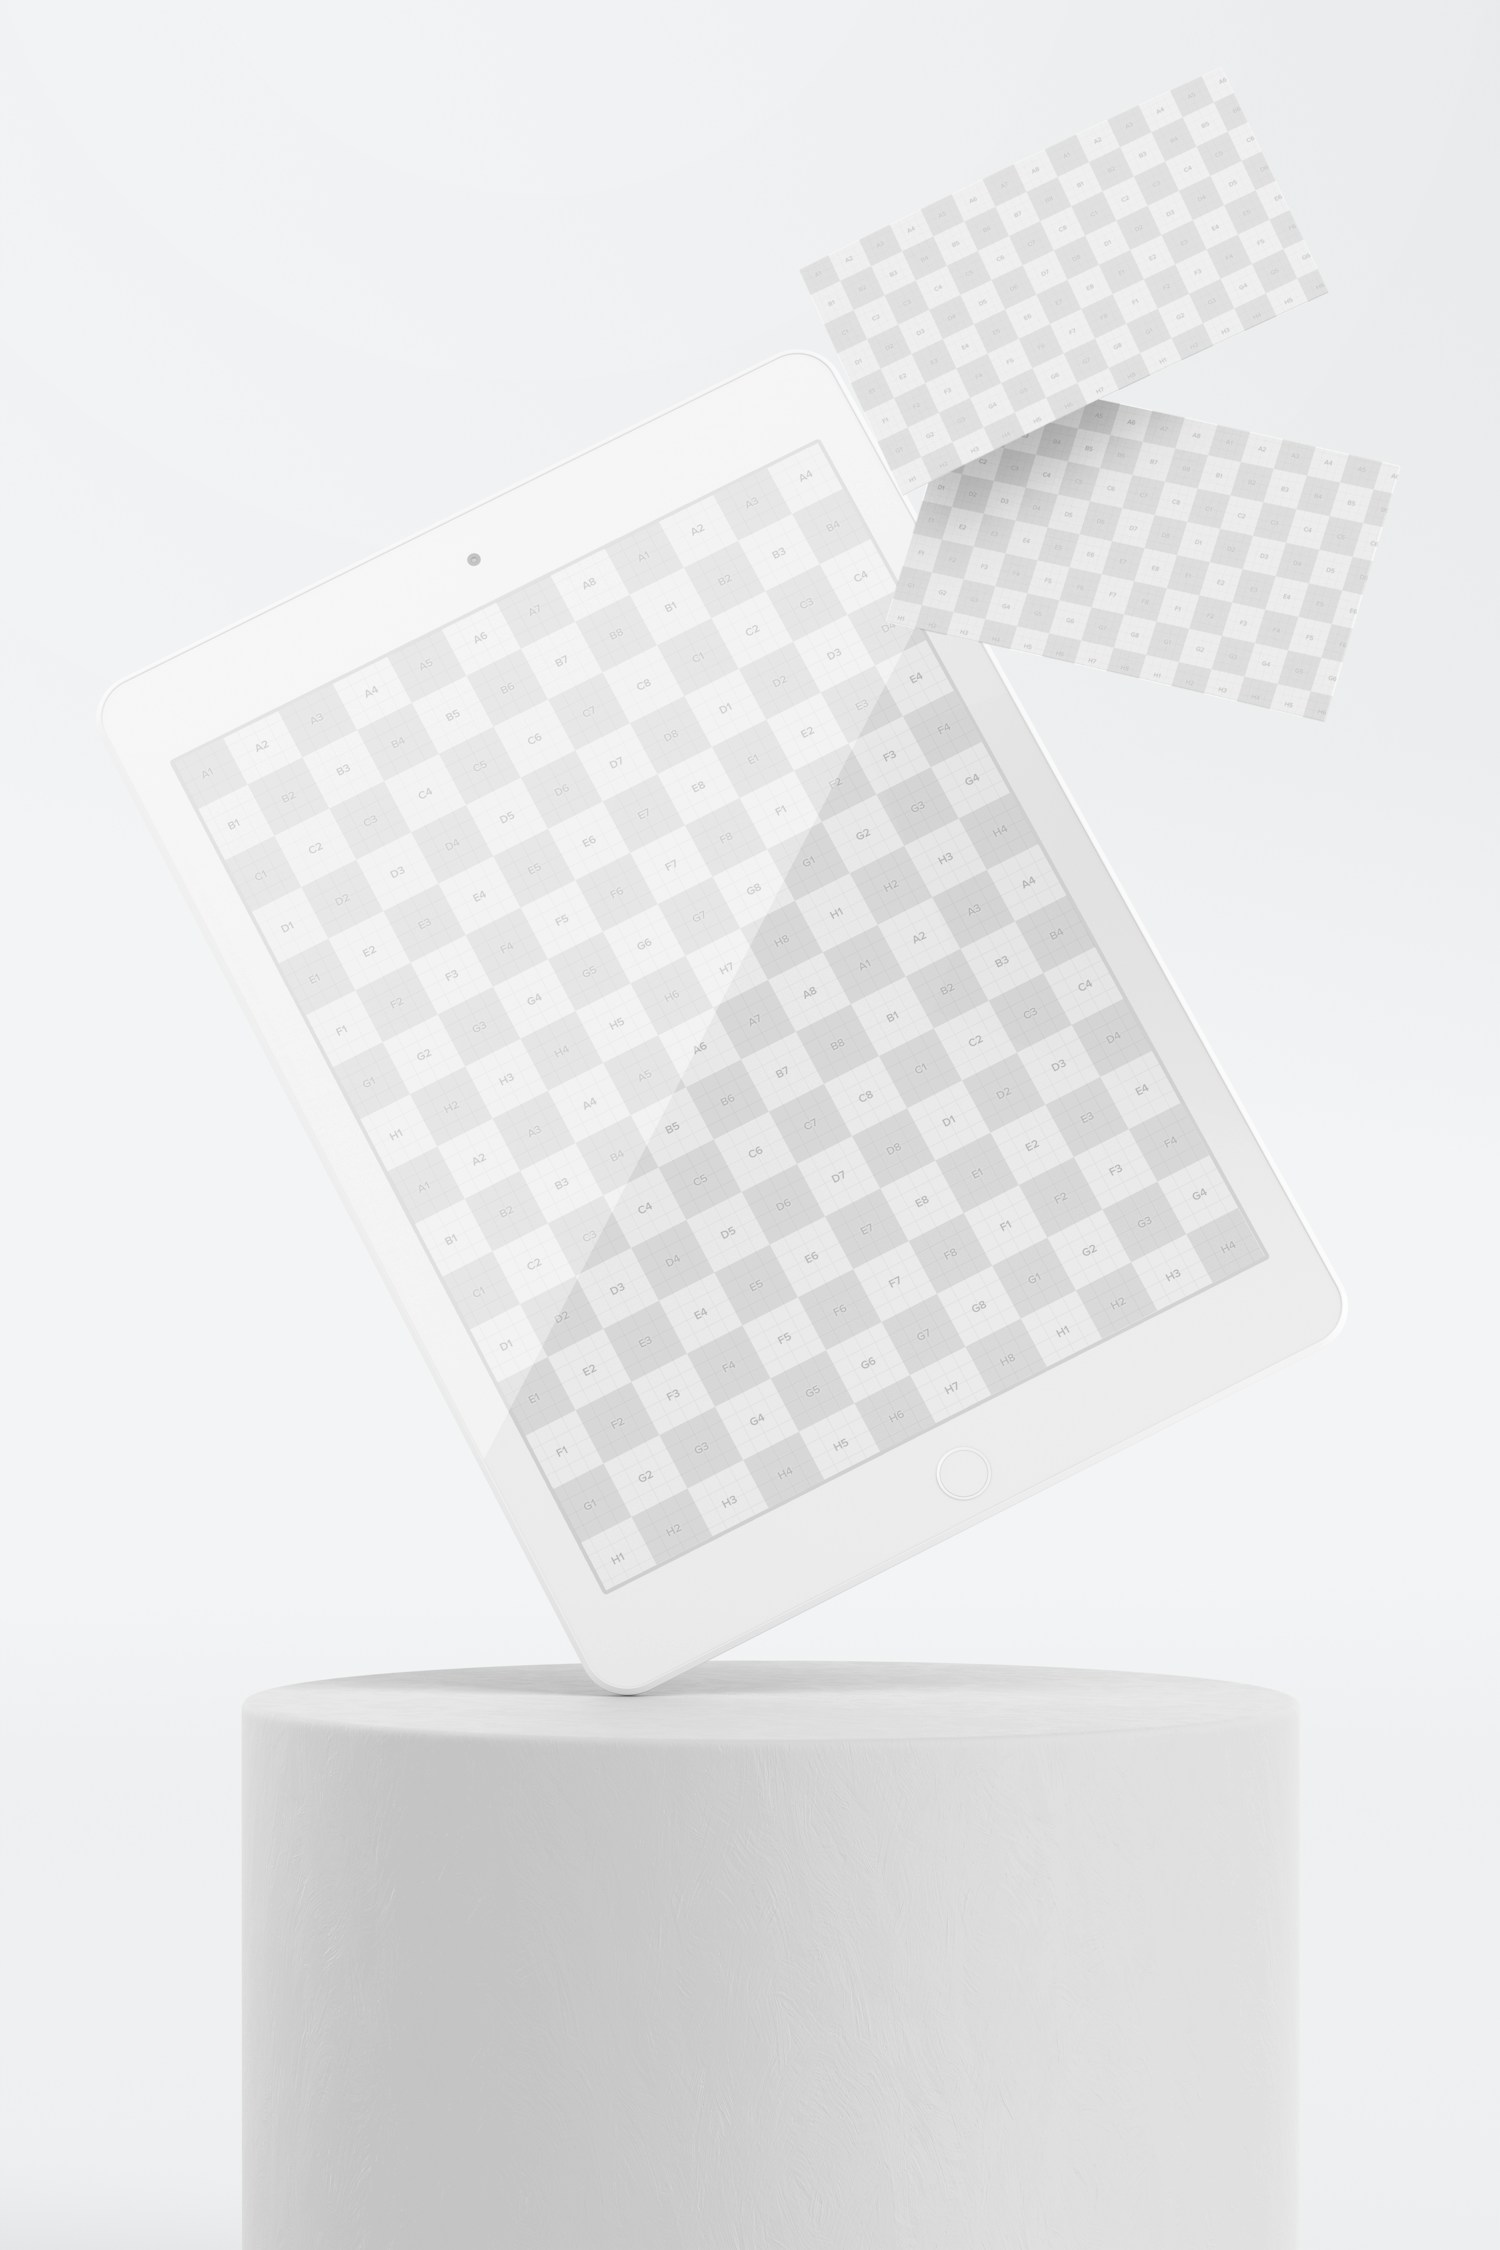 Maqueta de Tarjeta de Presentación con iPad, Cayendo